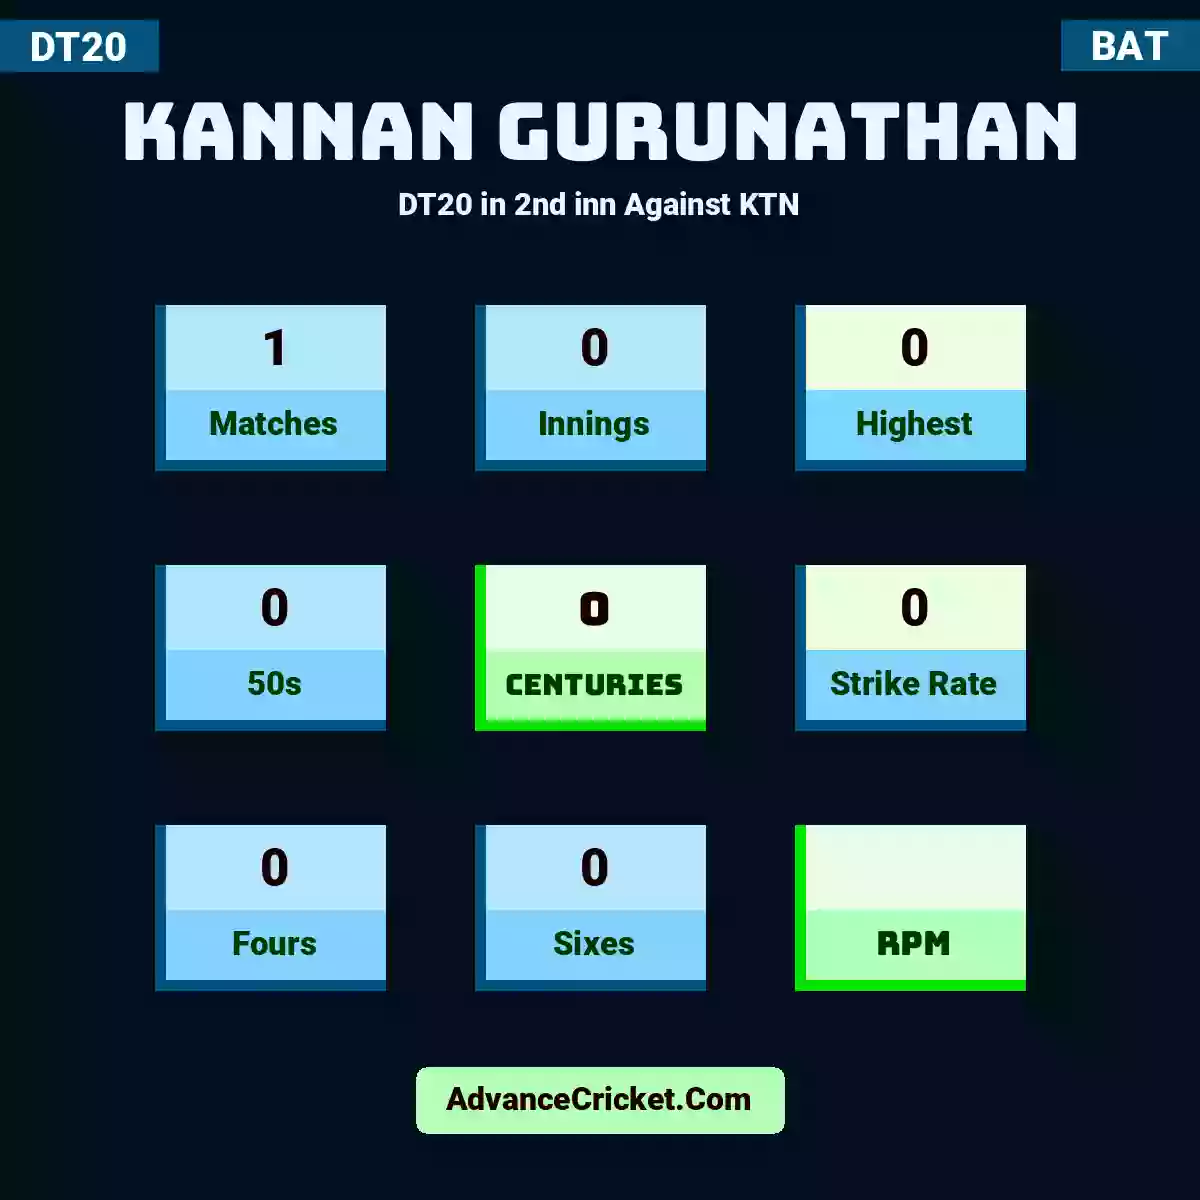 Kannan Gurunathan DT20  in 2nd inn Against KTN, Kannan Gurunathan played 1 matches, scored 0 runs as highest, 0 half-centuries, and 0 centuries, with a strike rate of 0. K.Gurunathan hit 0 fours and 0 sixes.